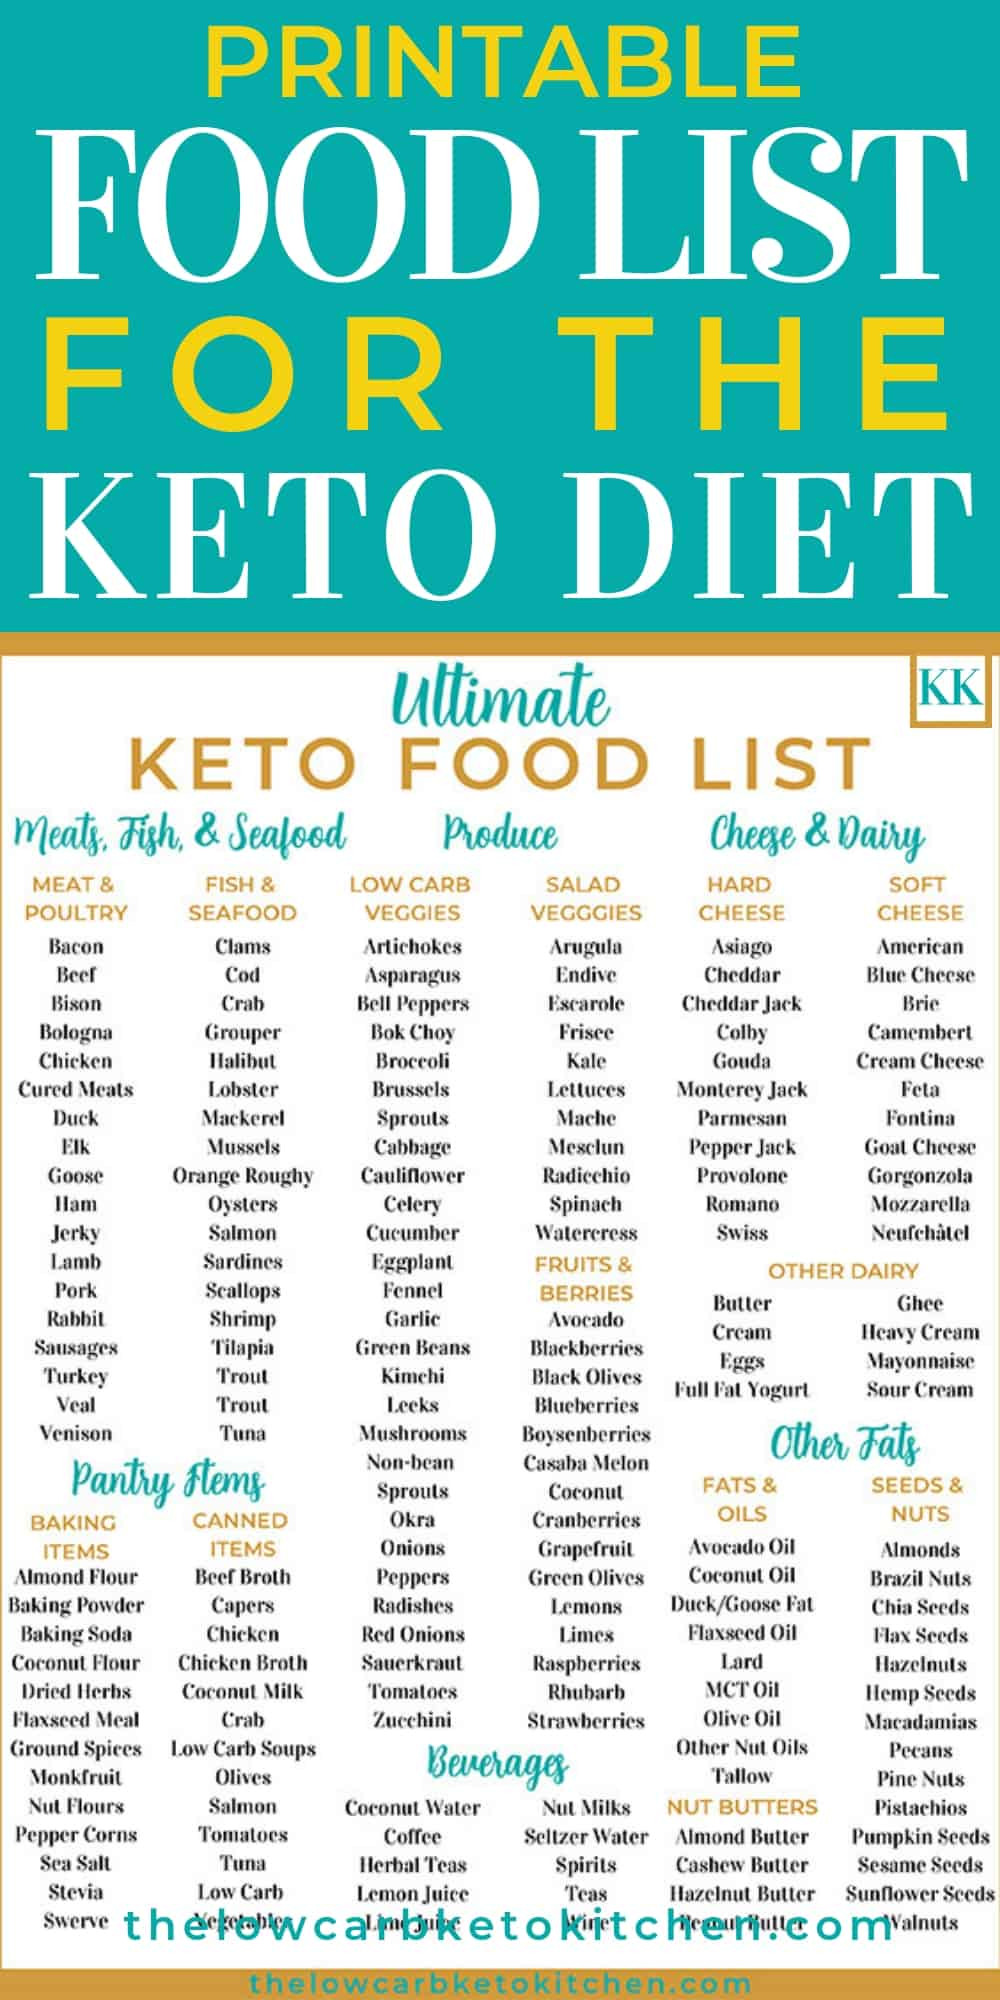 Keto Diet Food List Recipes
 The Ultimate Keto Food List with Printable